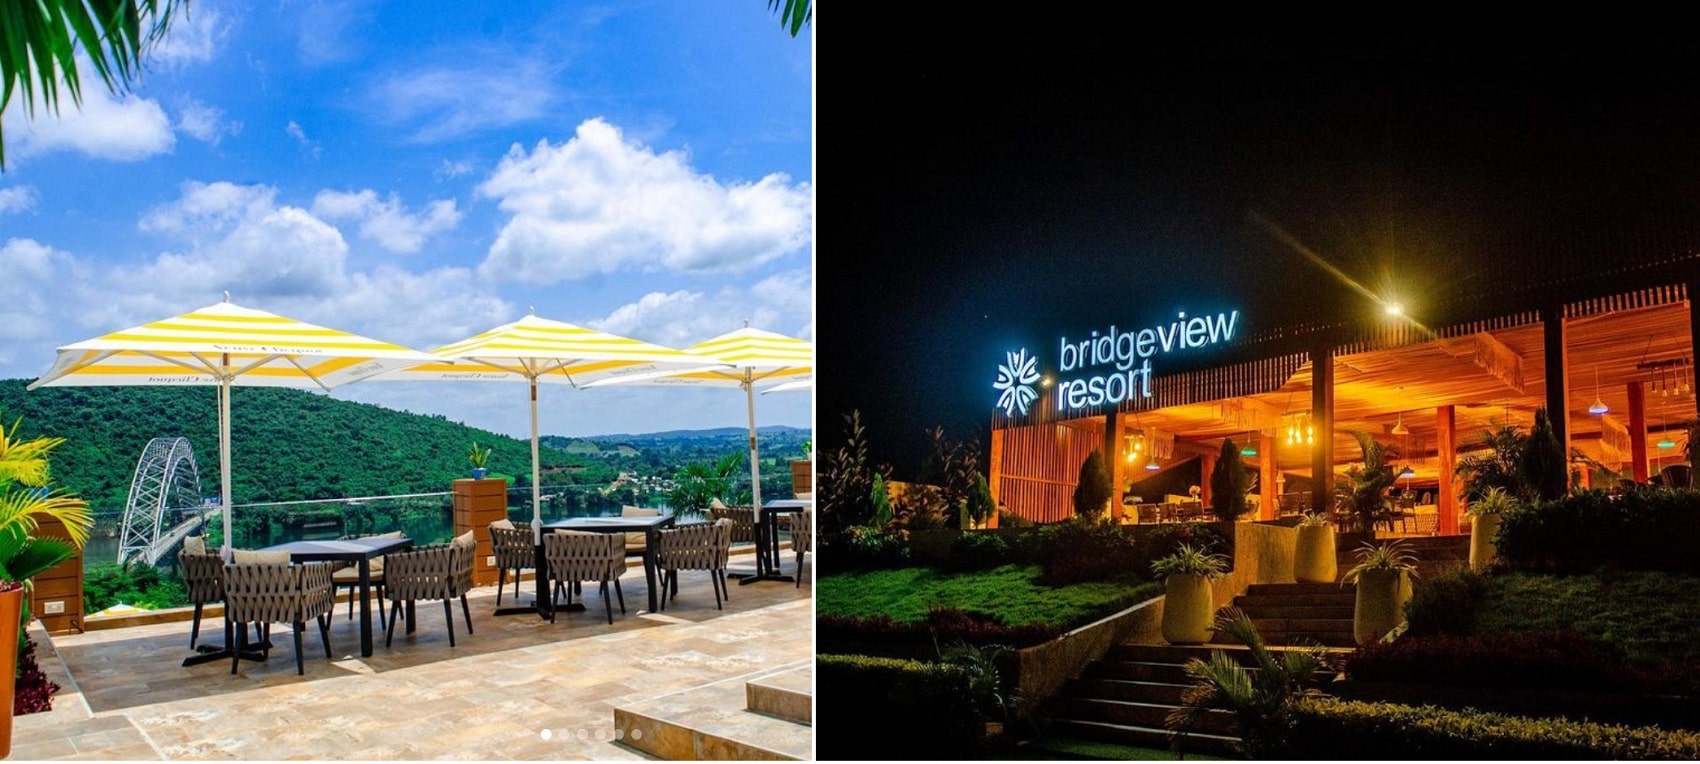 Bridgeview Resort Akosombo (Booking, Location, Menu, Prices)